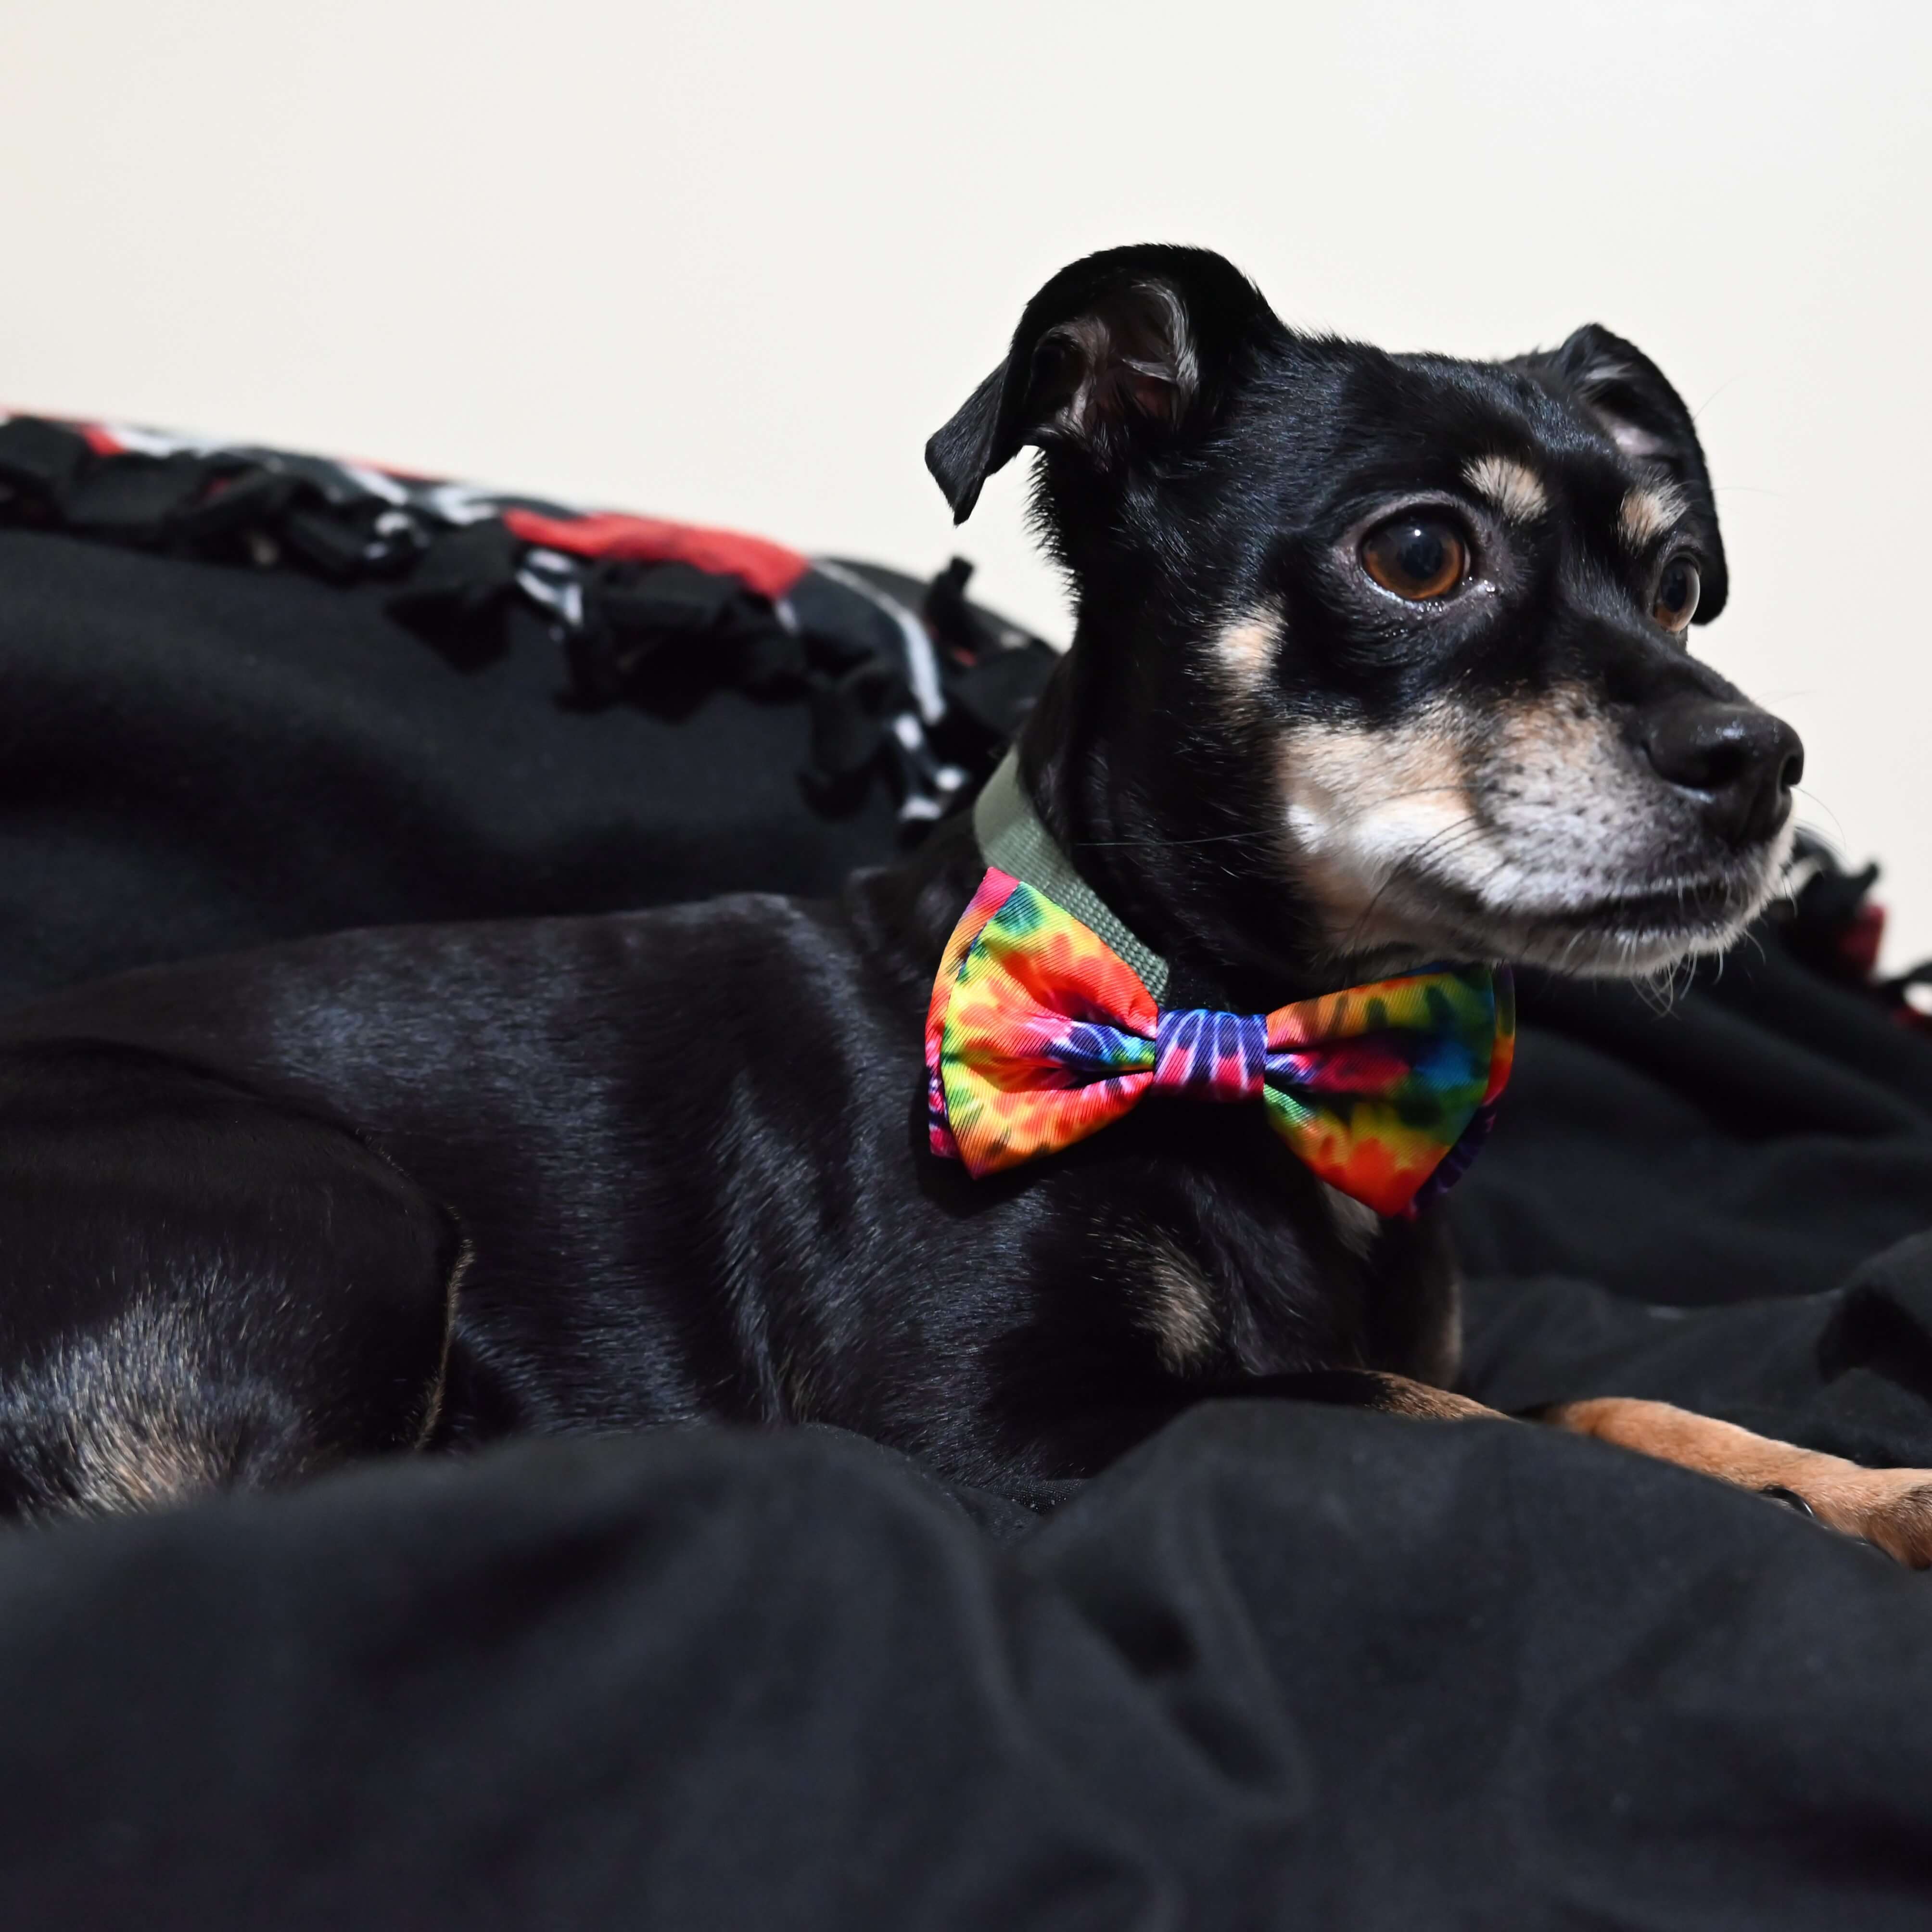 huxley & kent woodstock bow tie on a black small dog 